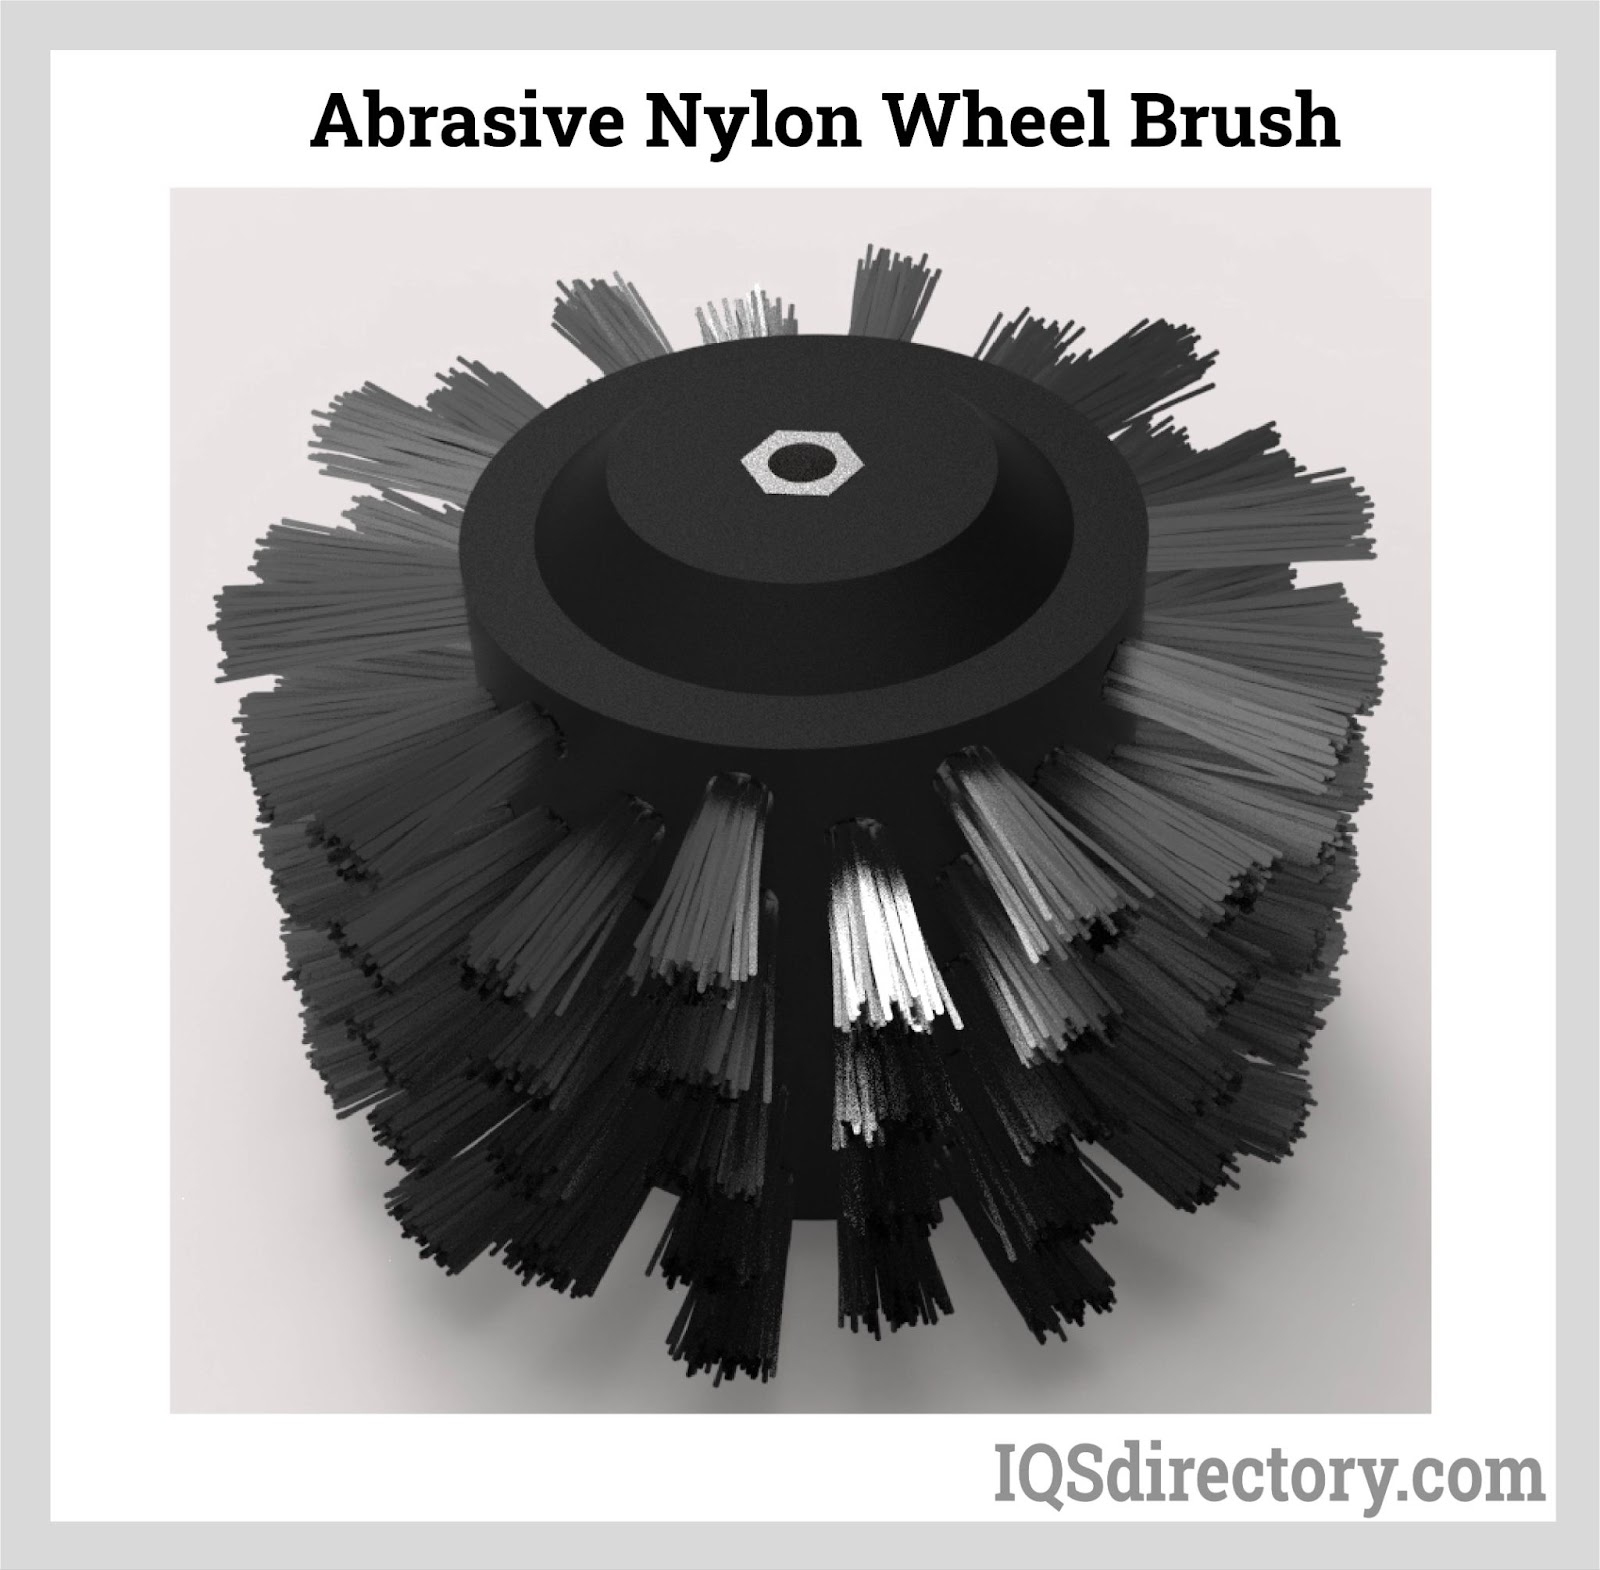 Abrasive Nylon Wheel Brush